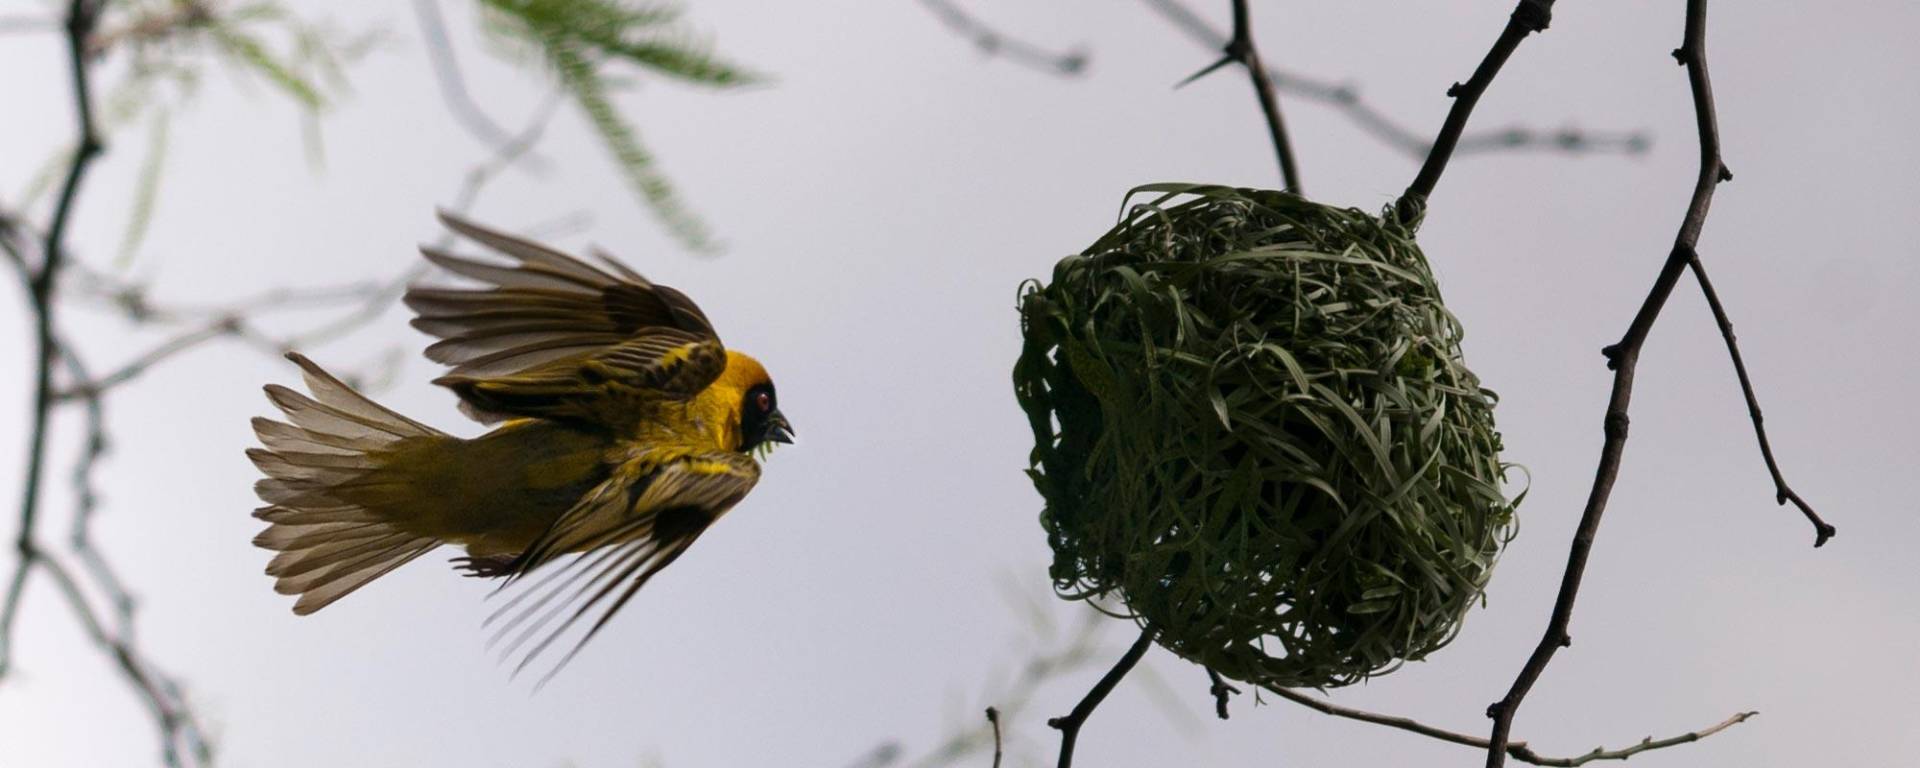 Weaver bird busy building the nest